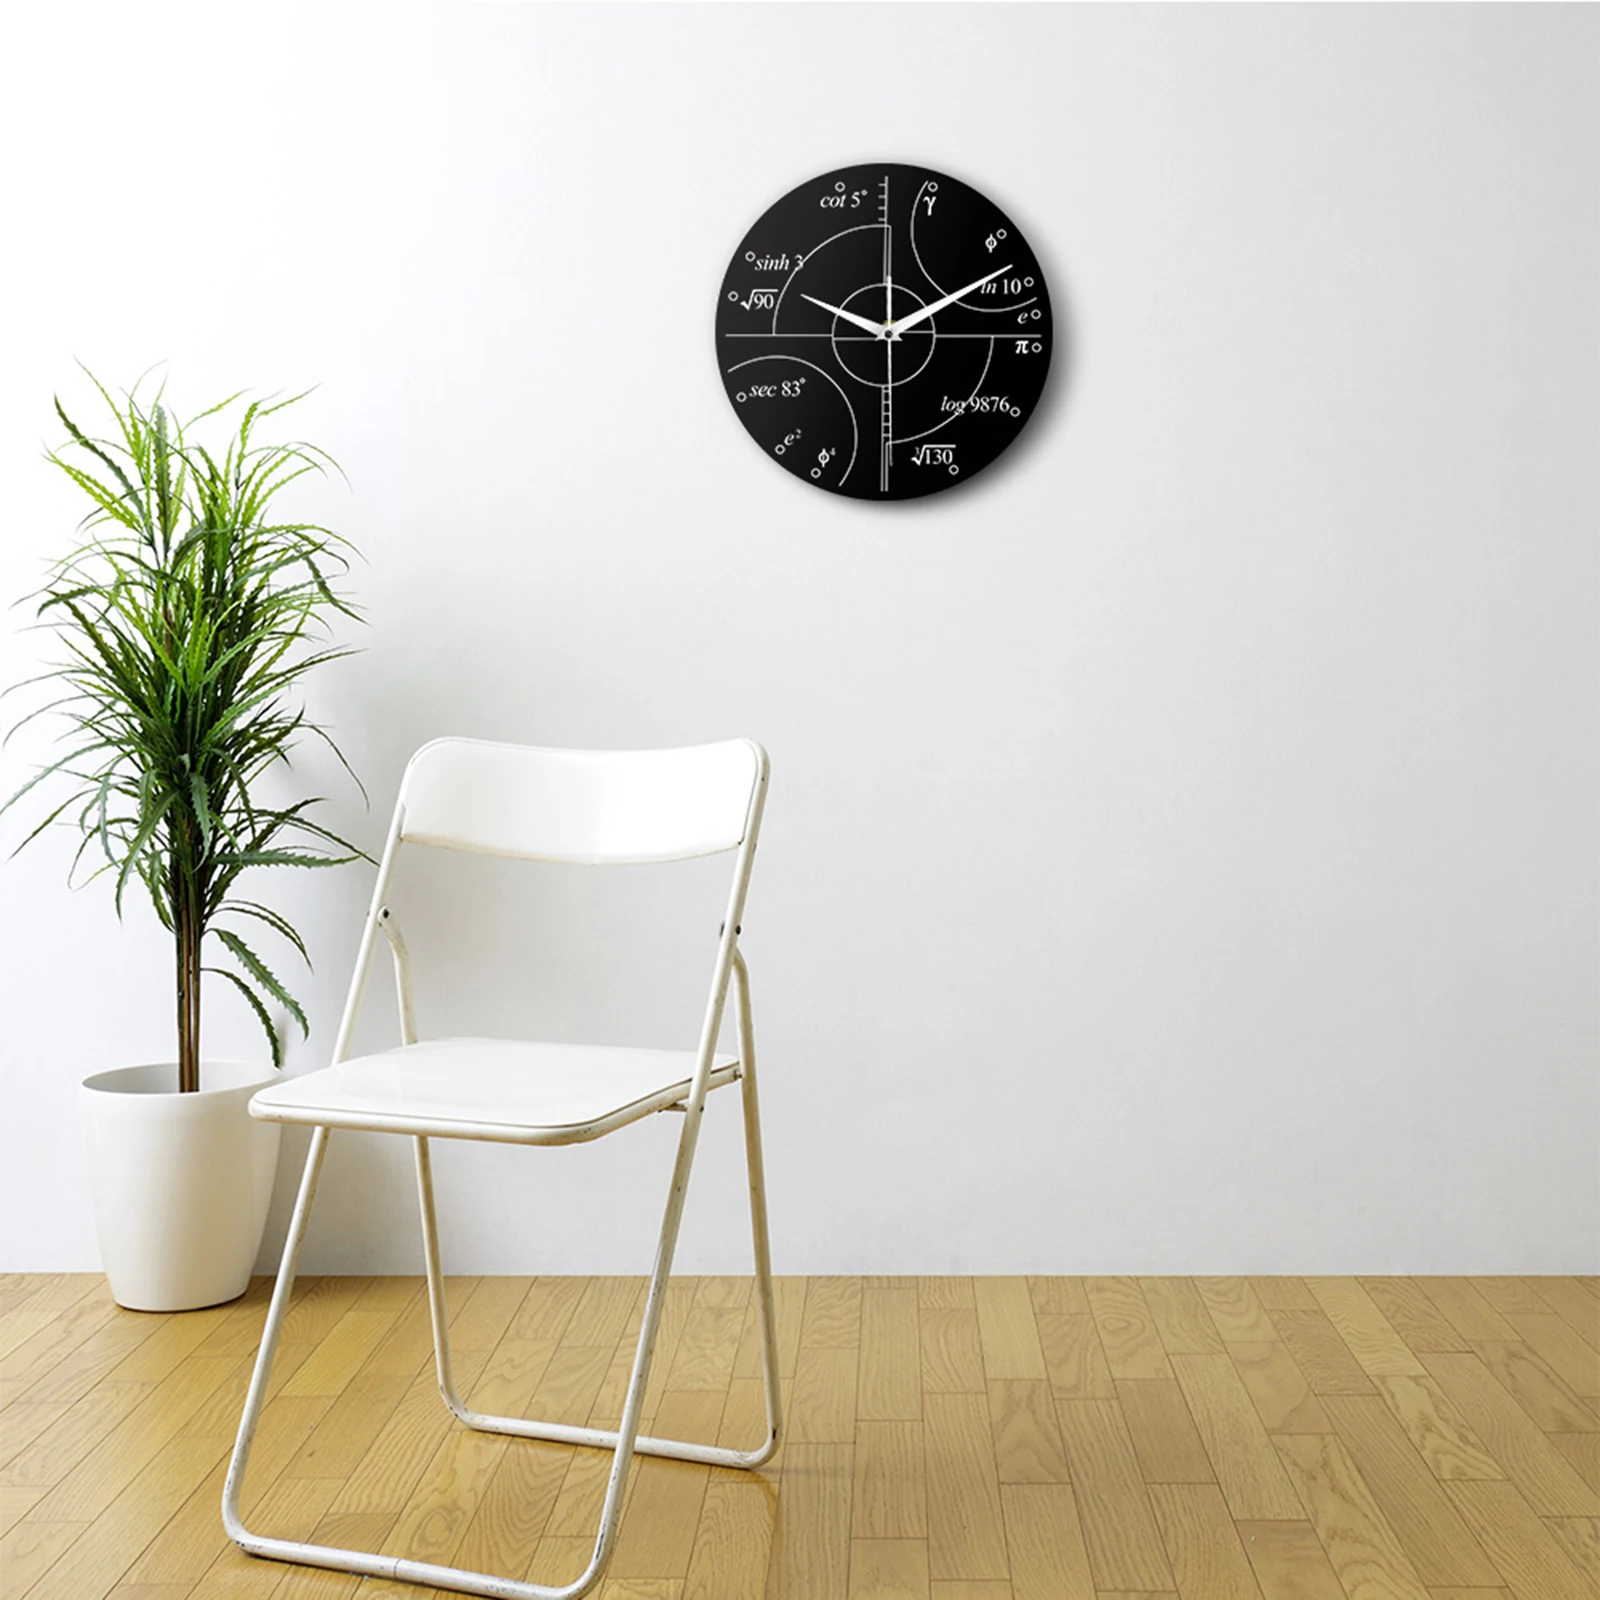 Math wall clock silent non-smoking tick wall clock battery-powered decorative